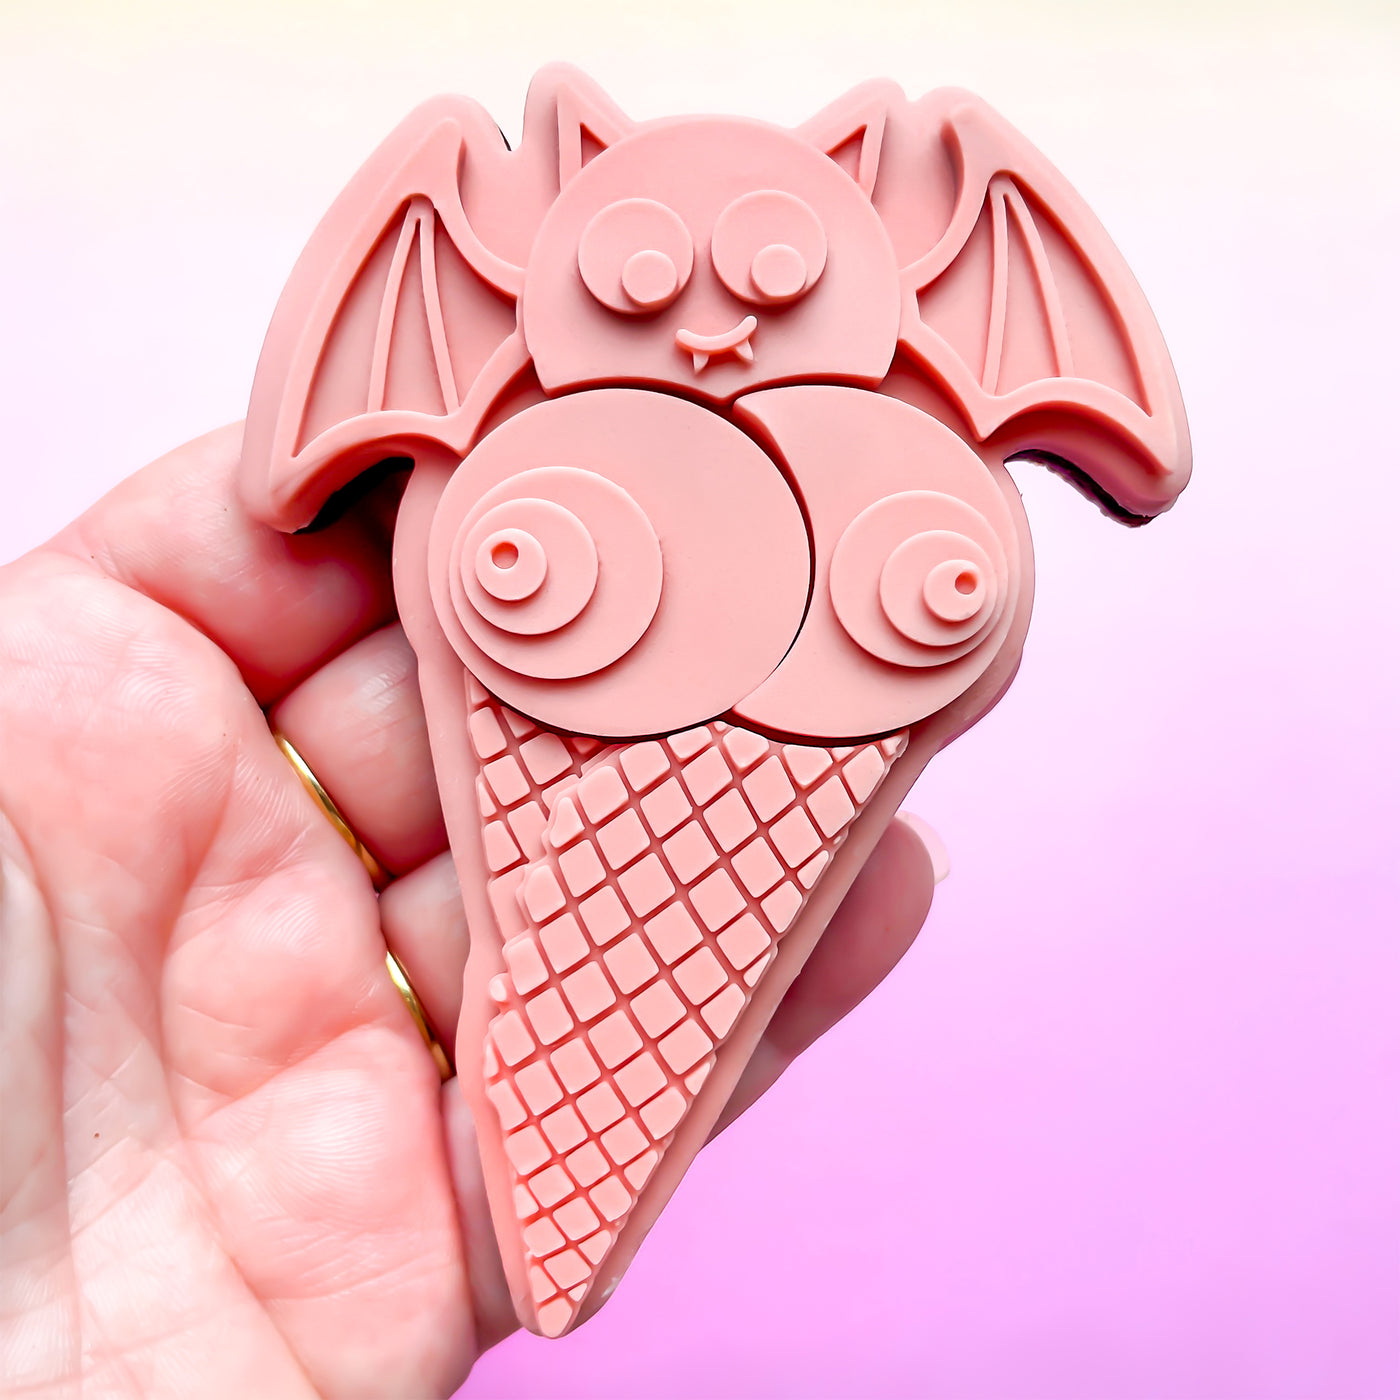 Scoop Ice Cream With Bat